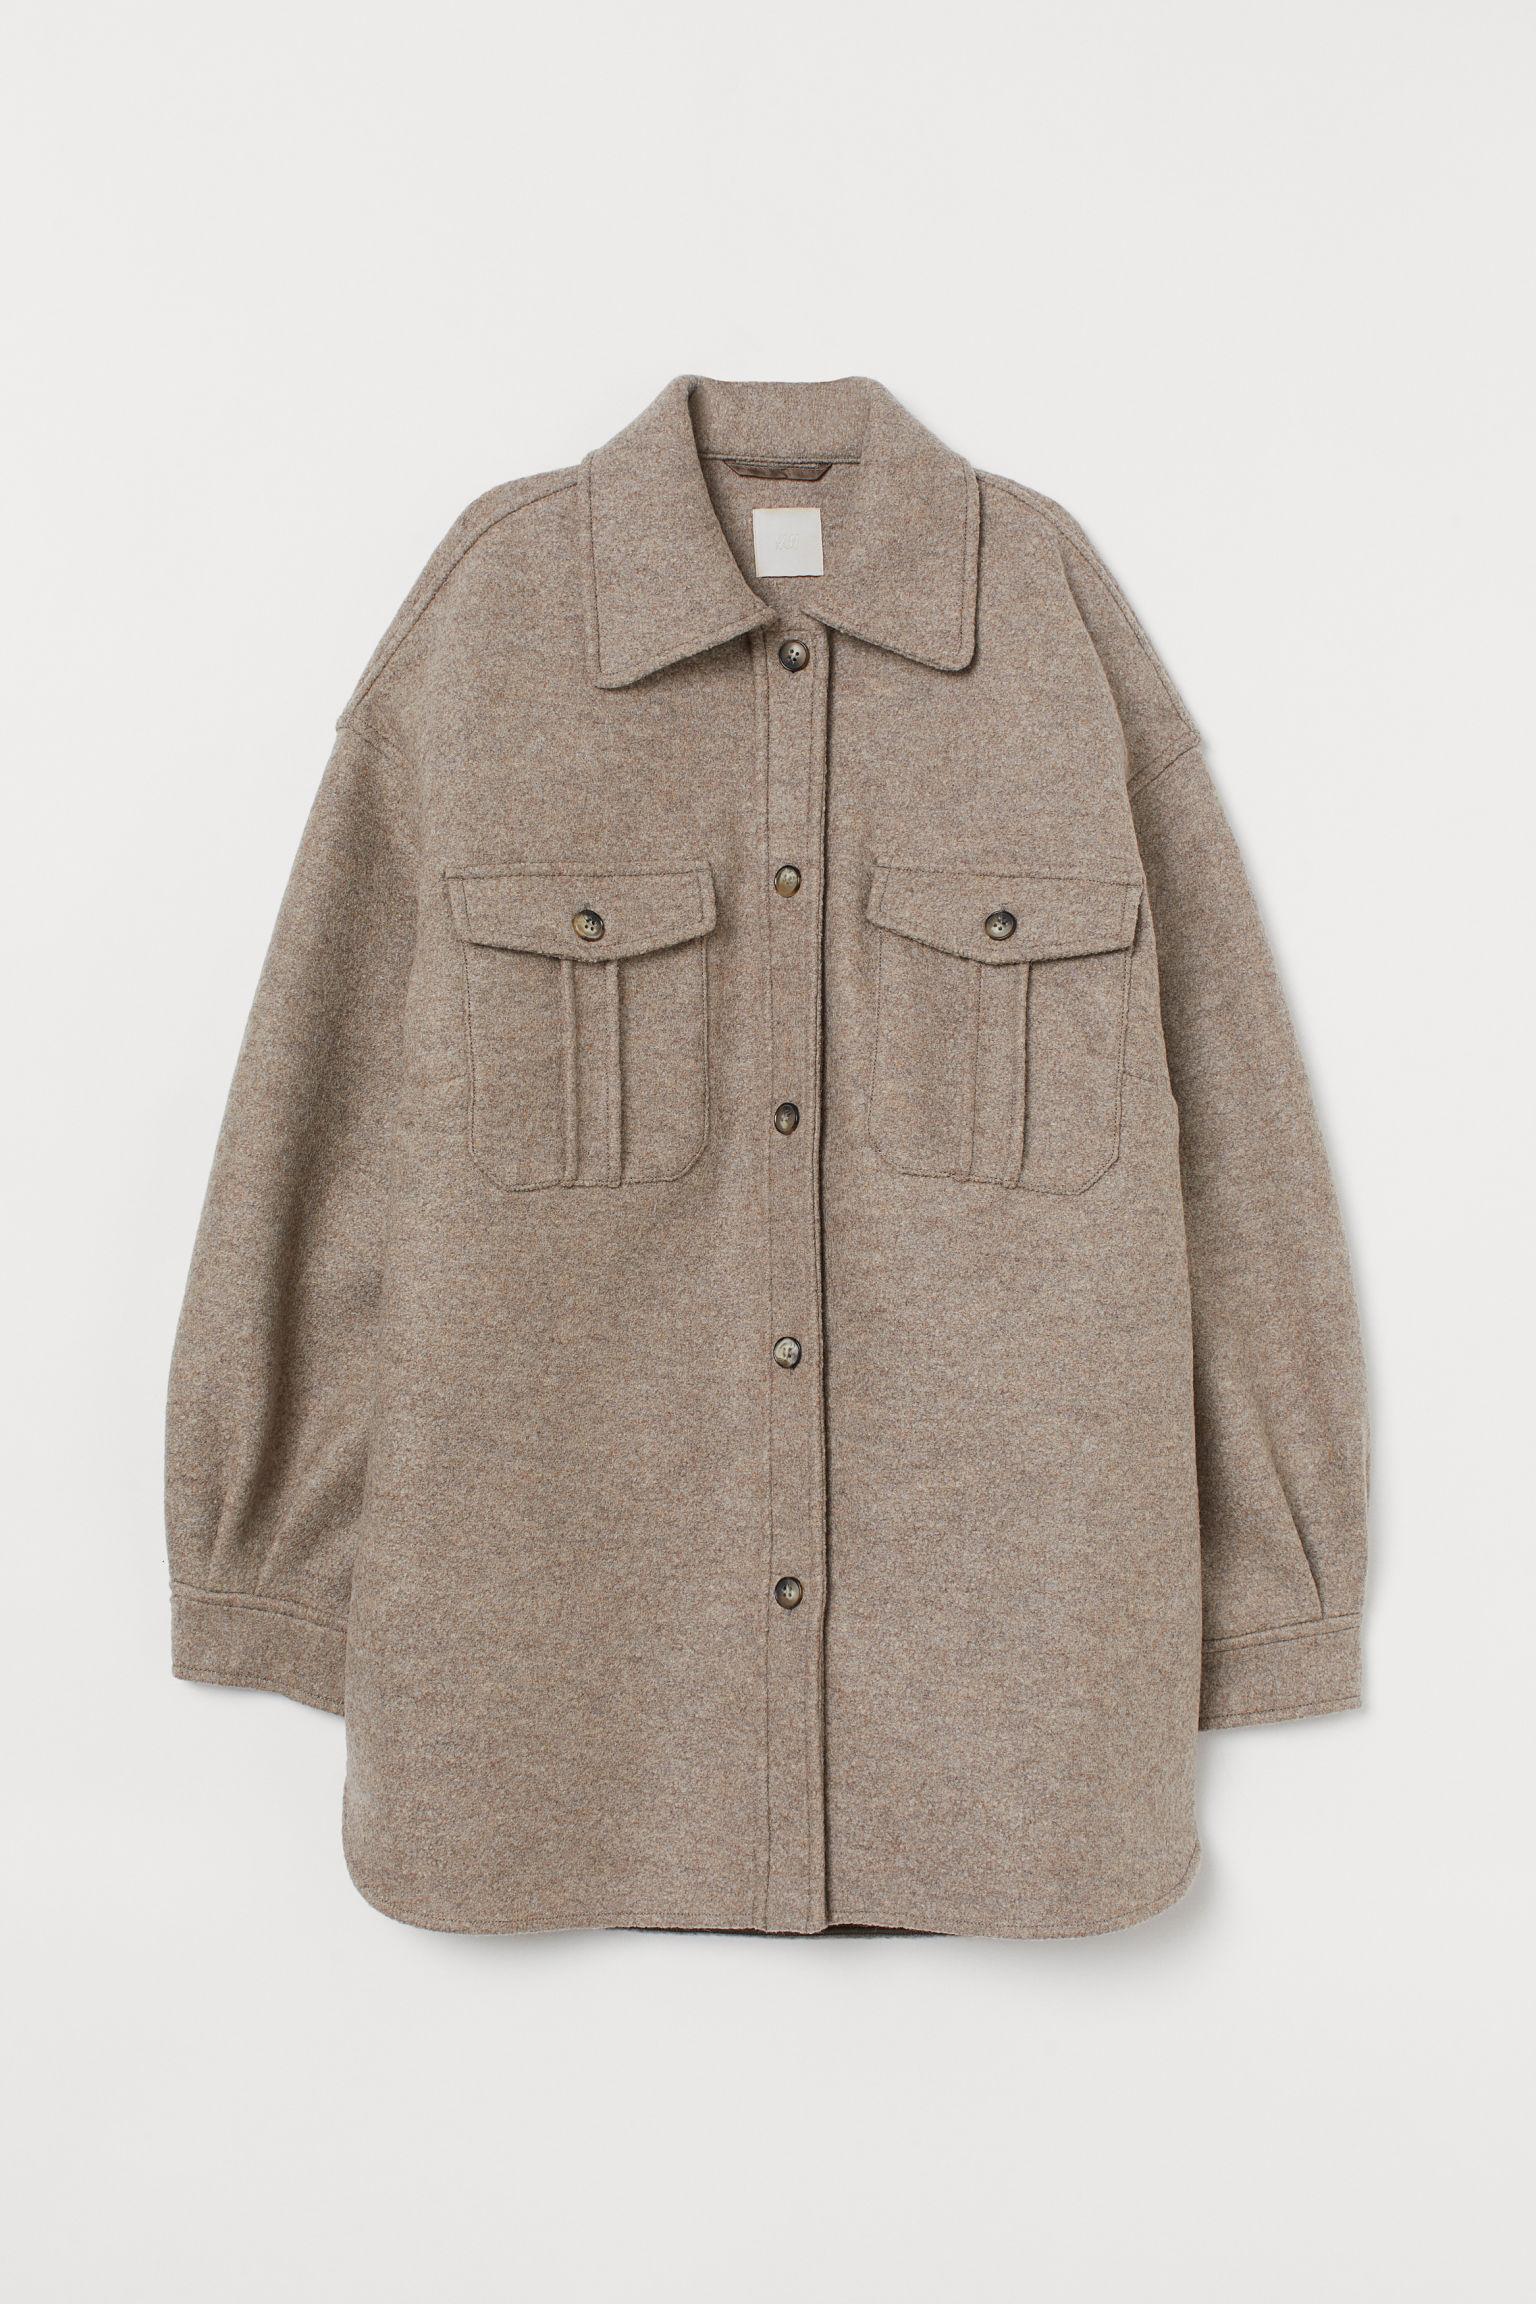 H&M Oversized Wool Shirt Jacket in Grey (Grey) - Lyst